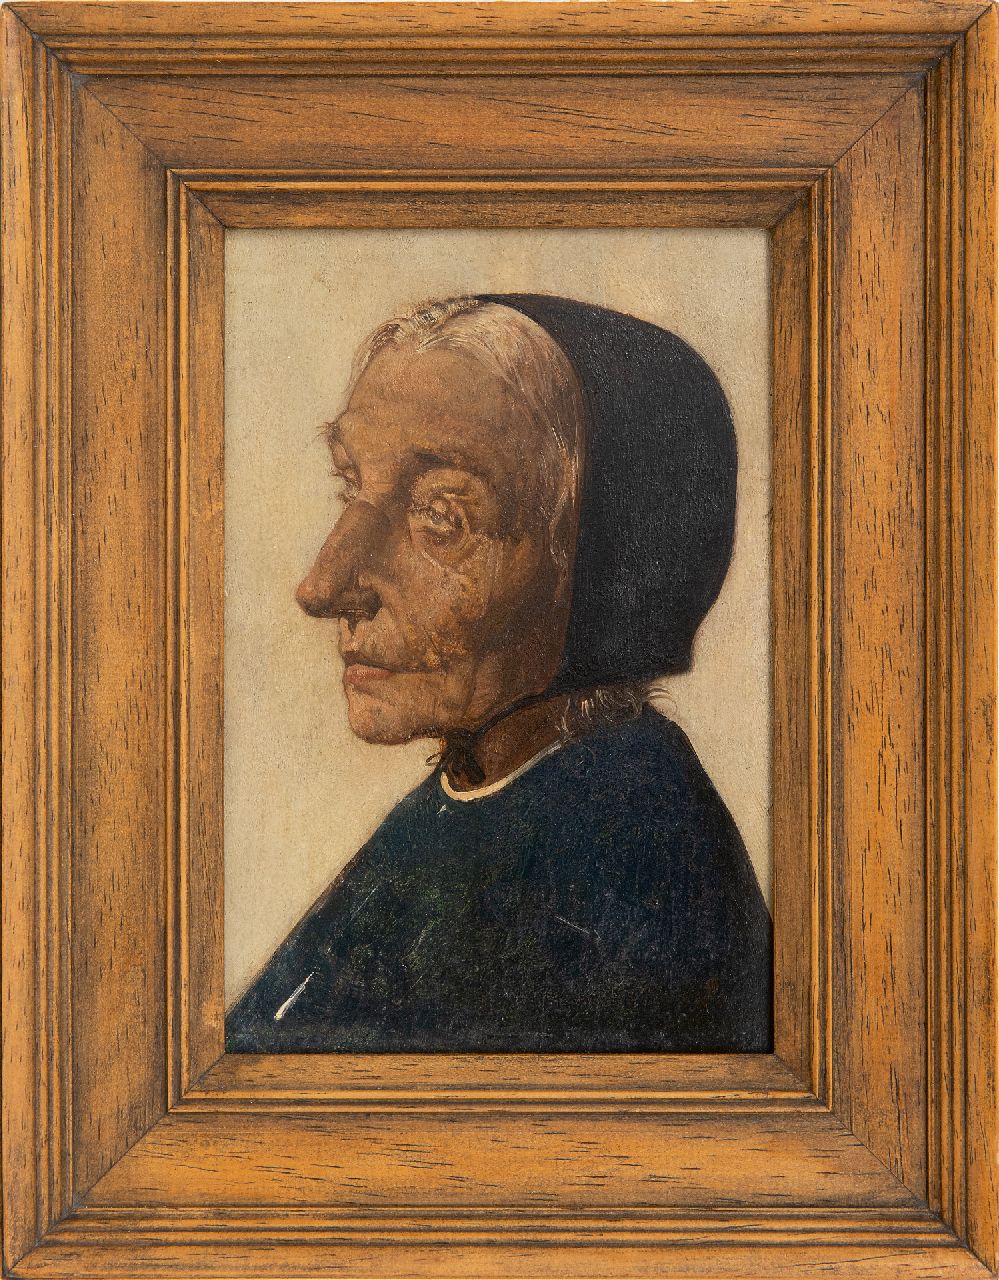 Berg W.H. van den | 'Willem' Hendrik van den Berg, A portrait of an elderly woman, oil on panel 16.4 x 10.7 cm, signed l.r.